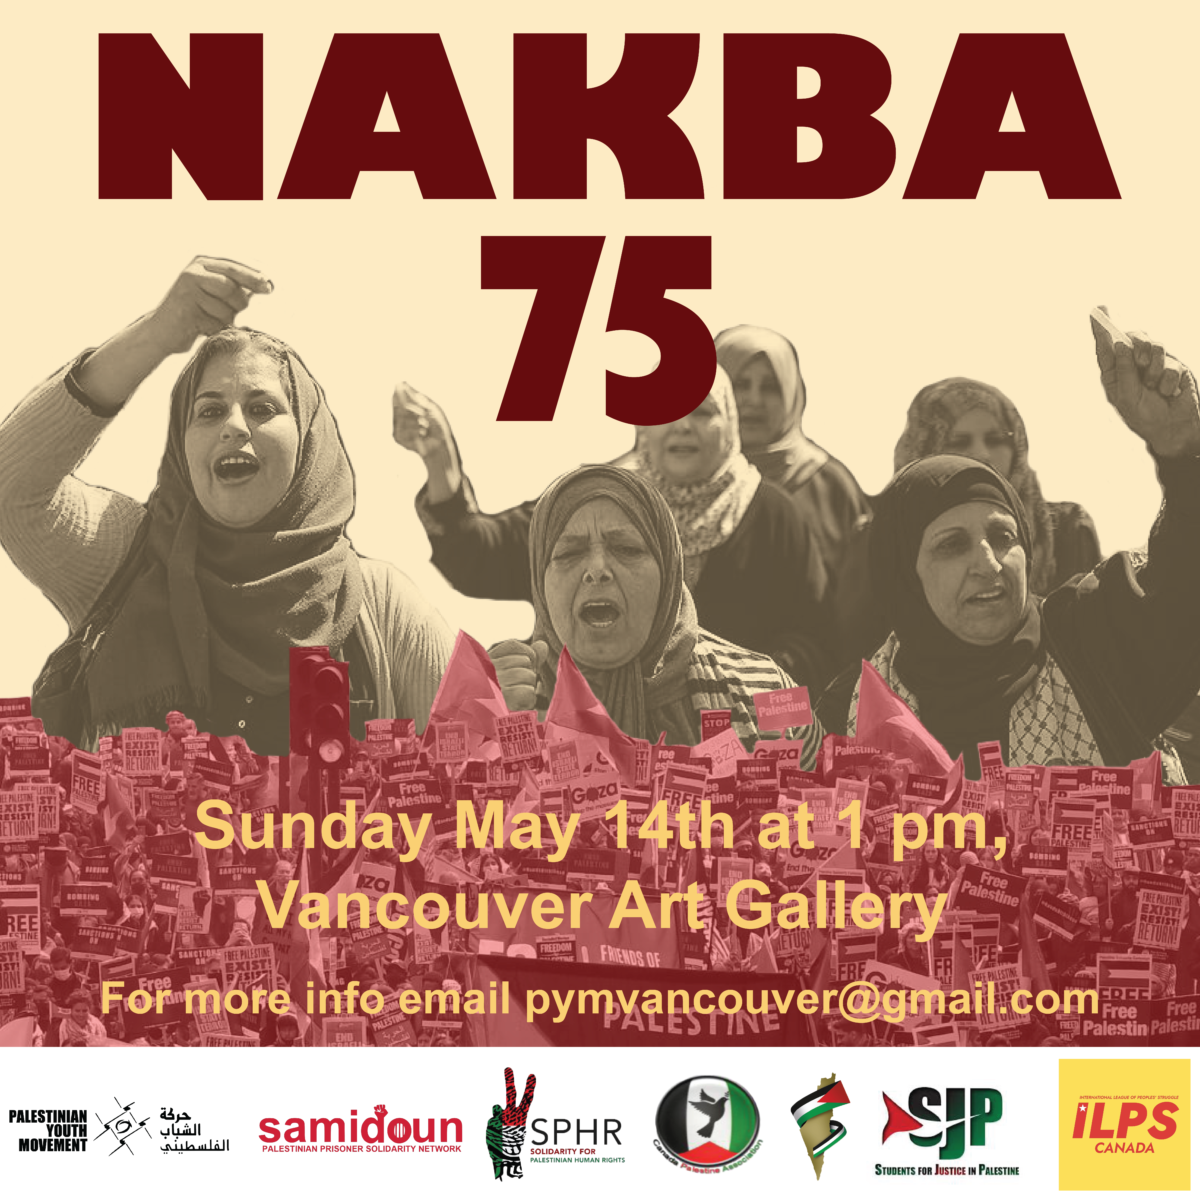 Nakba75 Vancouver